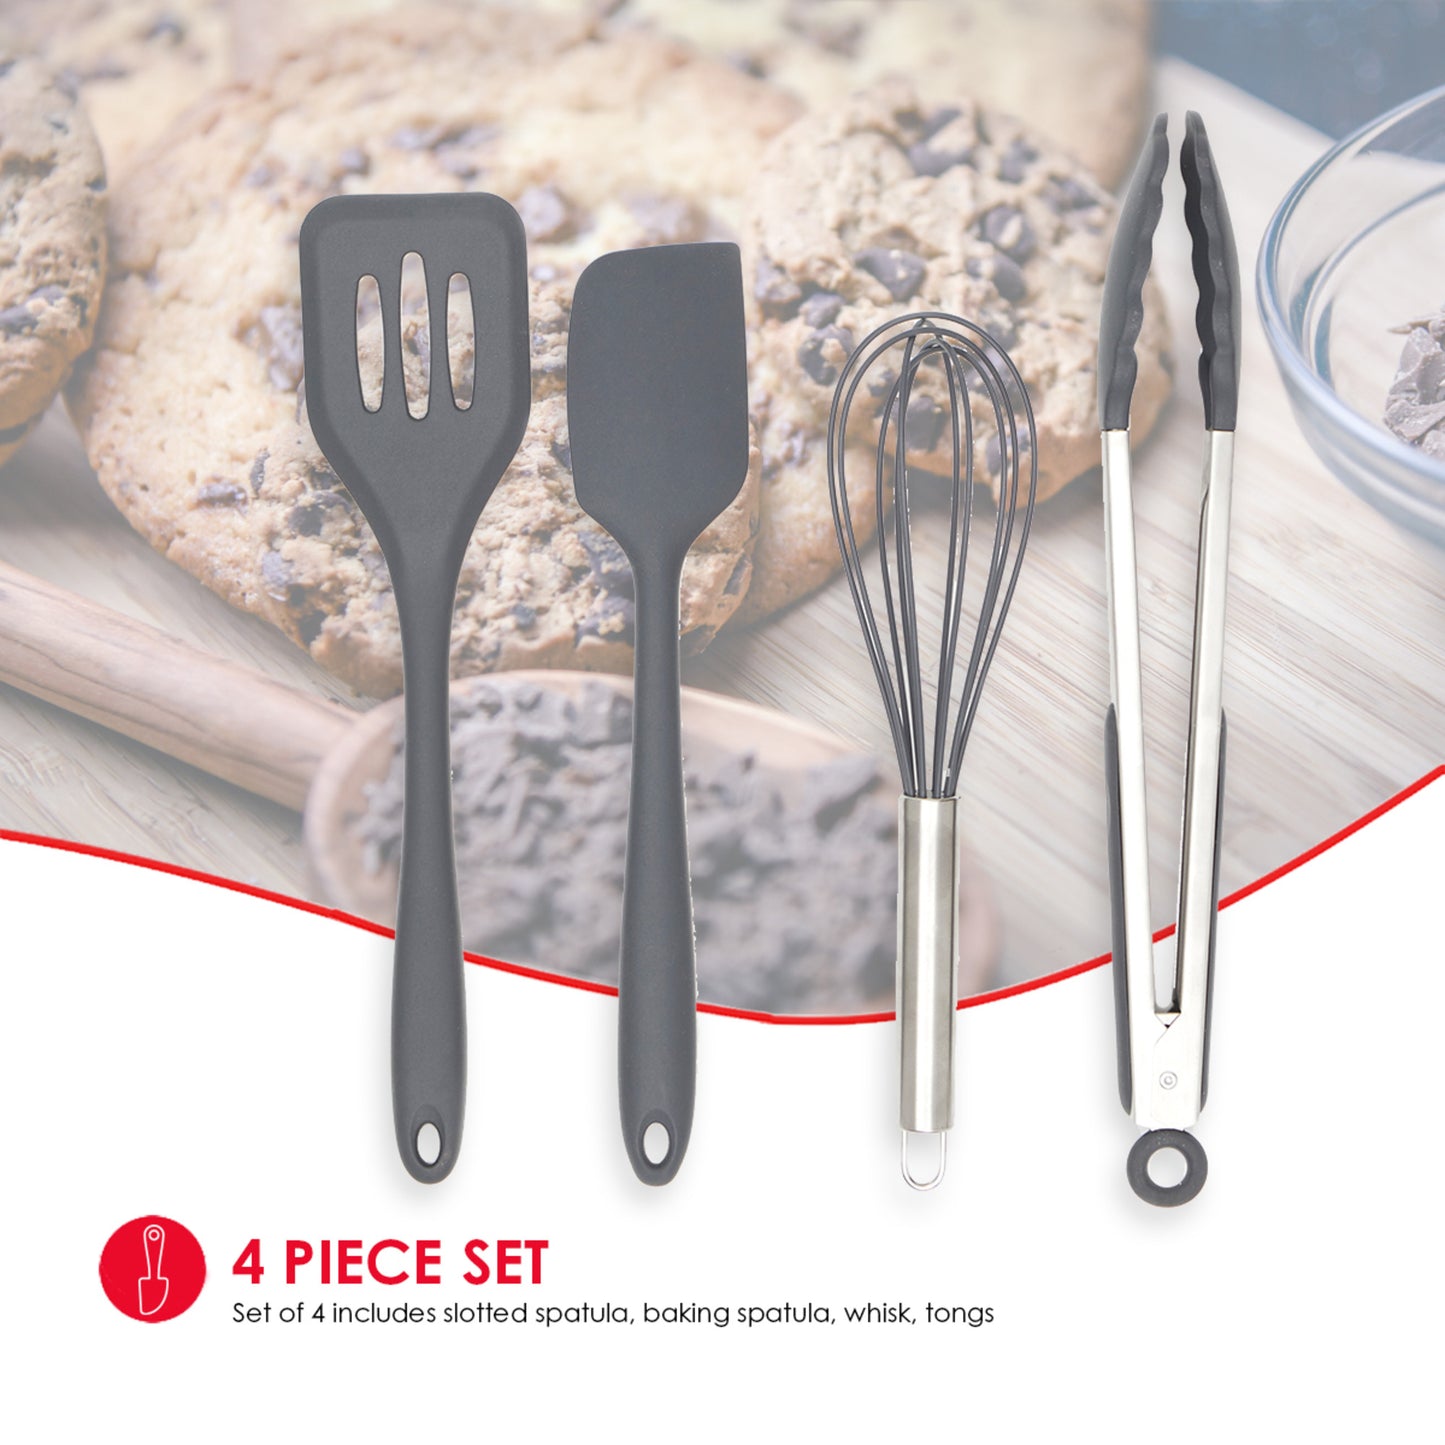 Home Basics 4 Piece Silicone Baking Tool Set, Grey - Grey